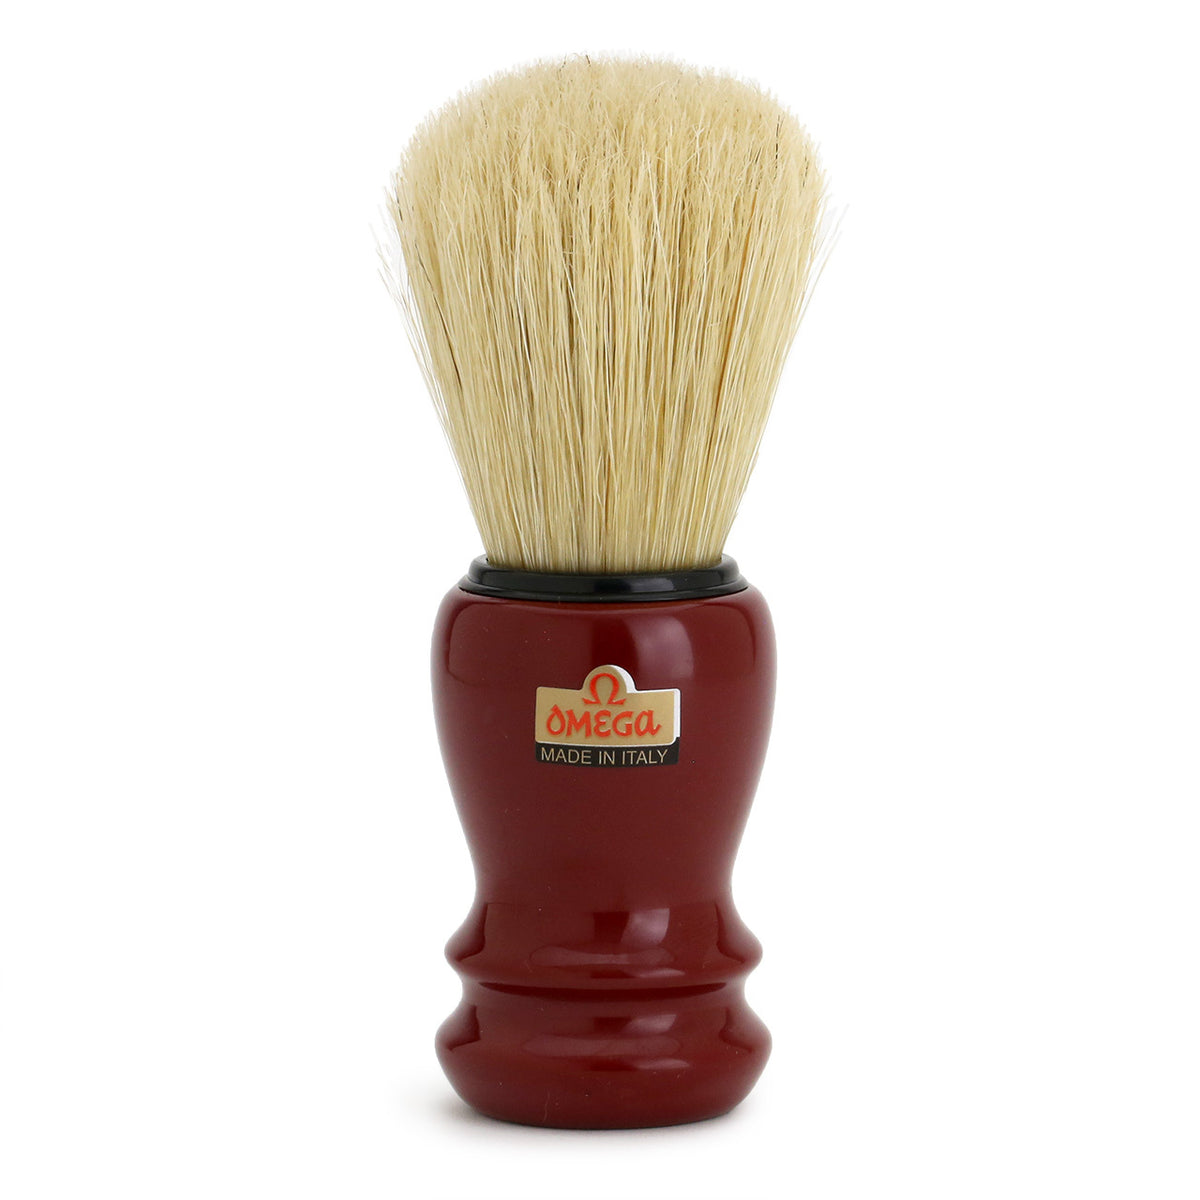 Omega Professional Pure Bristle Shaving Brush 10108 - Red